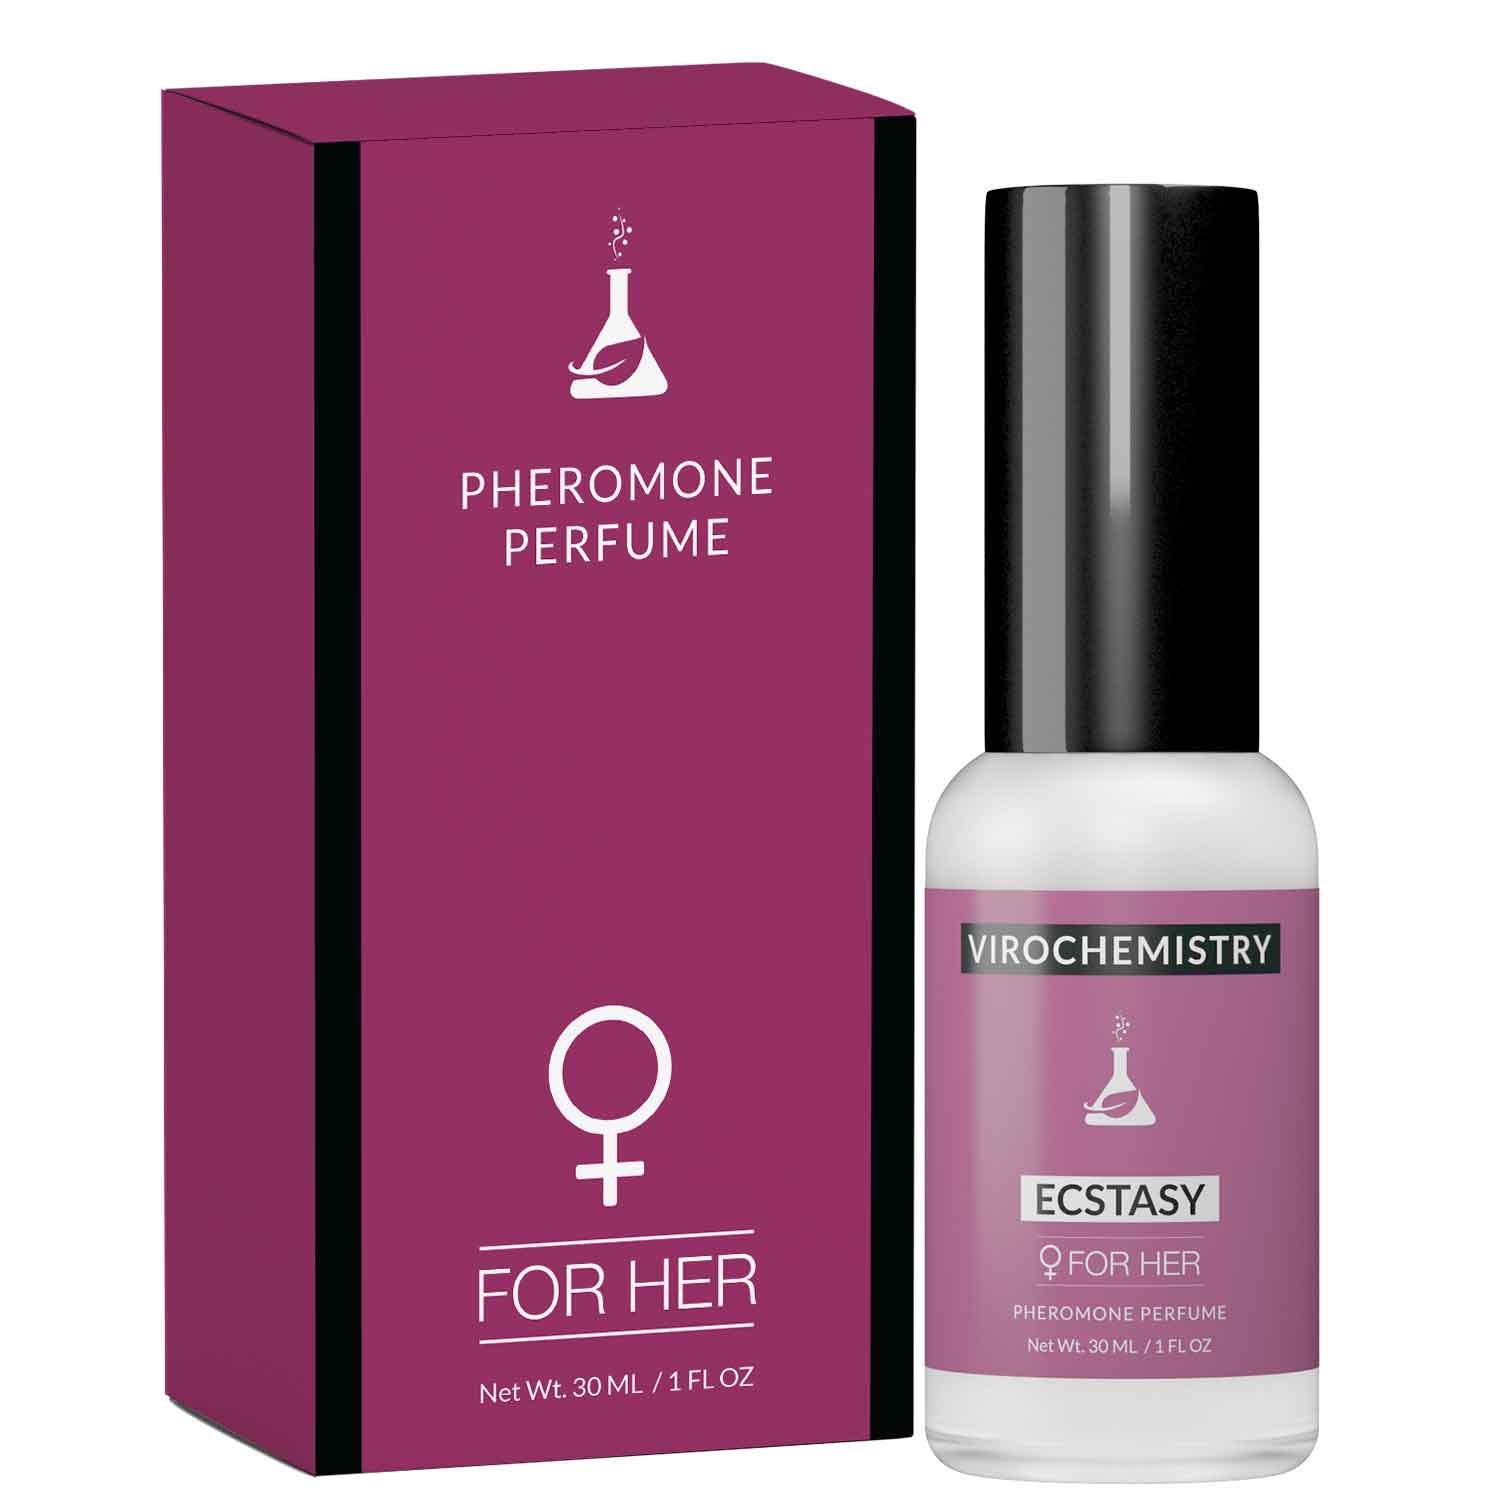 Pheromone Perfume For Women